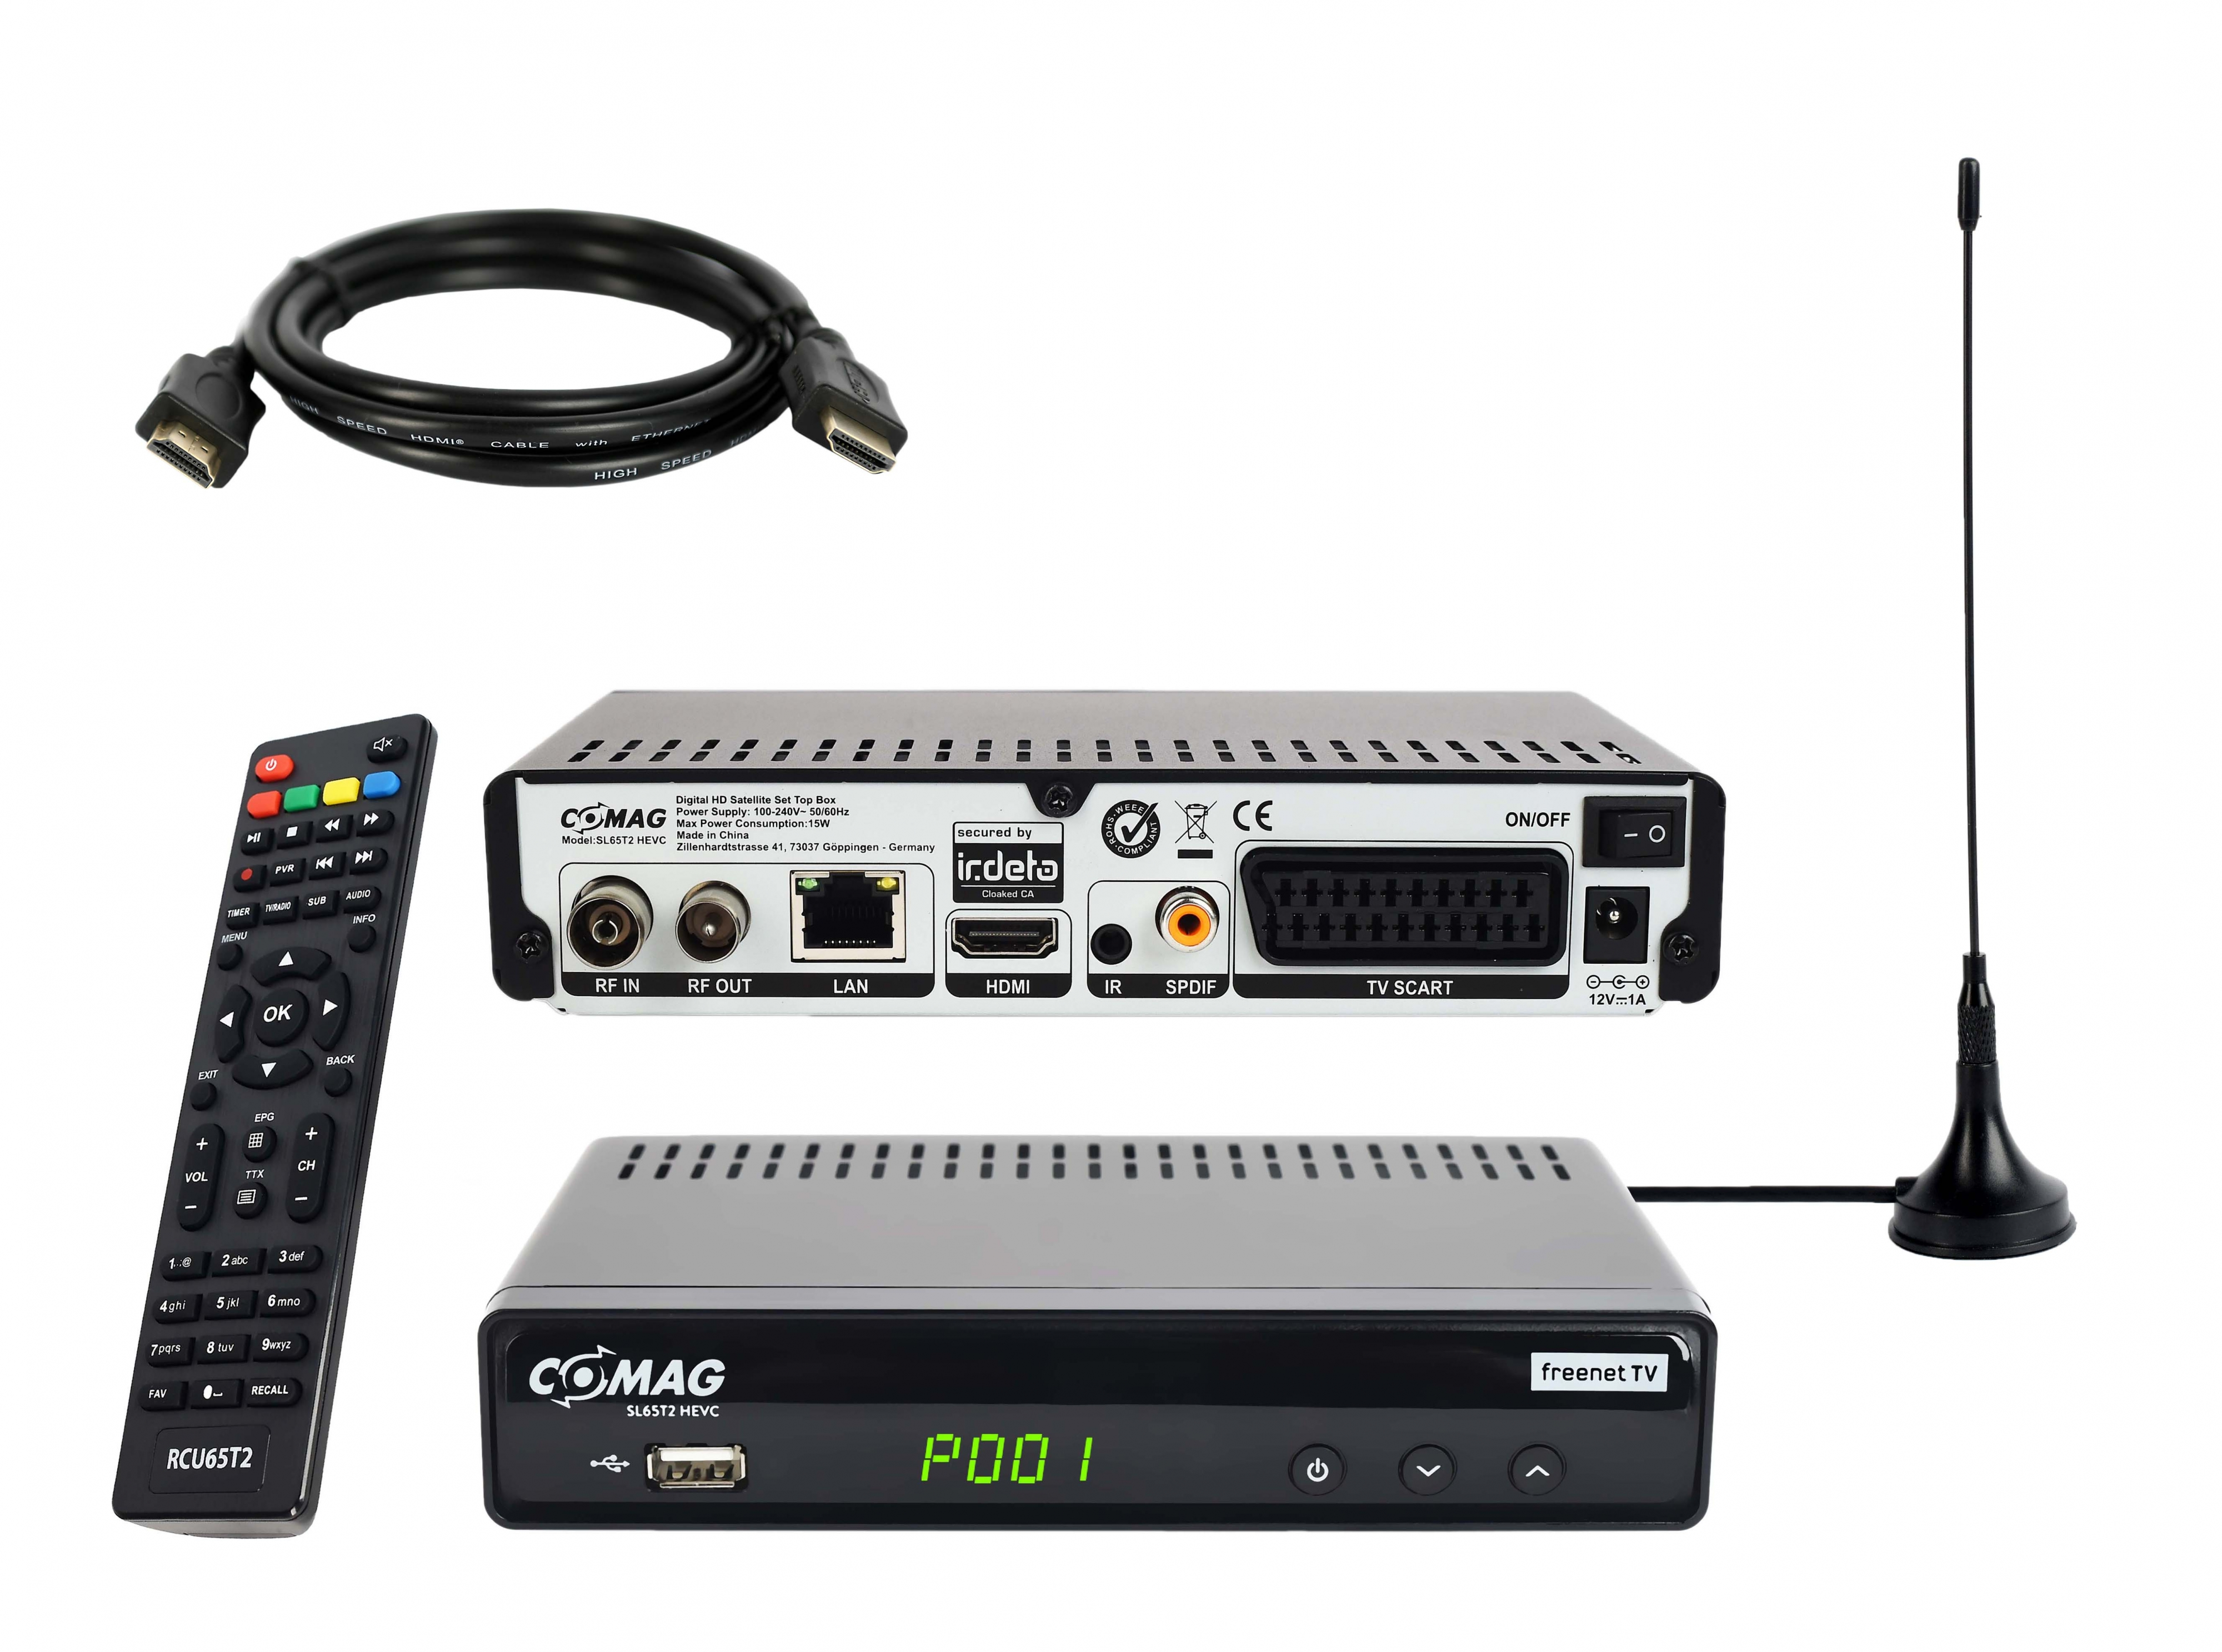 COMAG SL65T2 DVB-T2 PVR-Funktion, (HDTV, Home DVB-T2 DVB-T, DVB-T-Receiver Bundel (H.264), schwarz) (H.265)